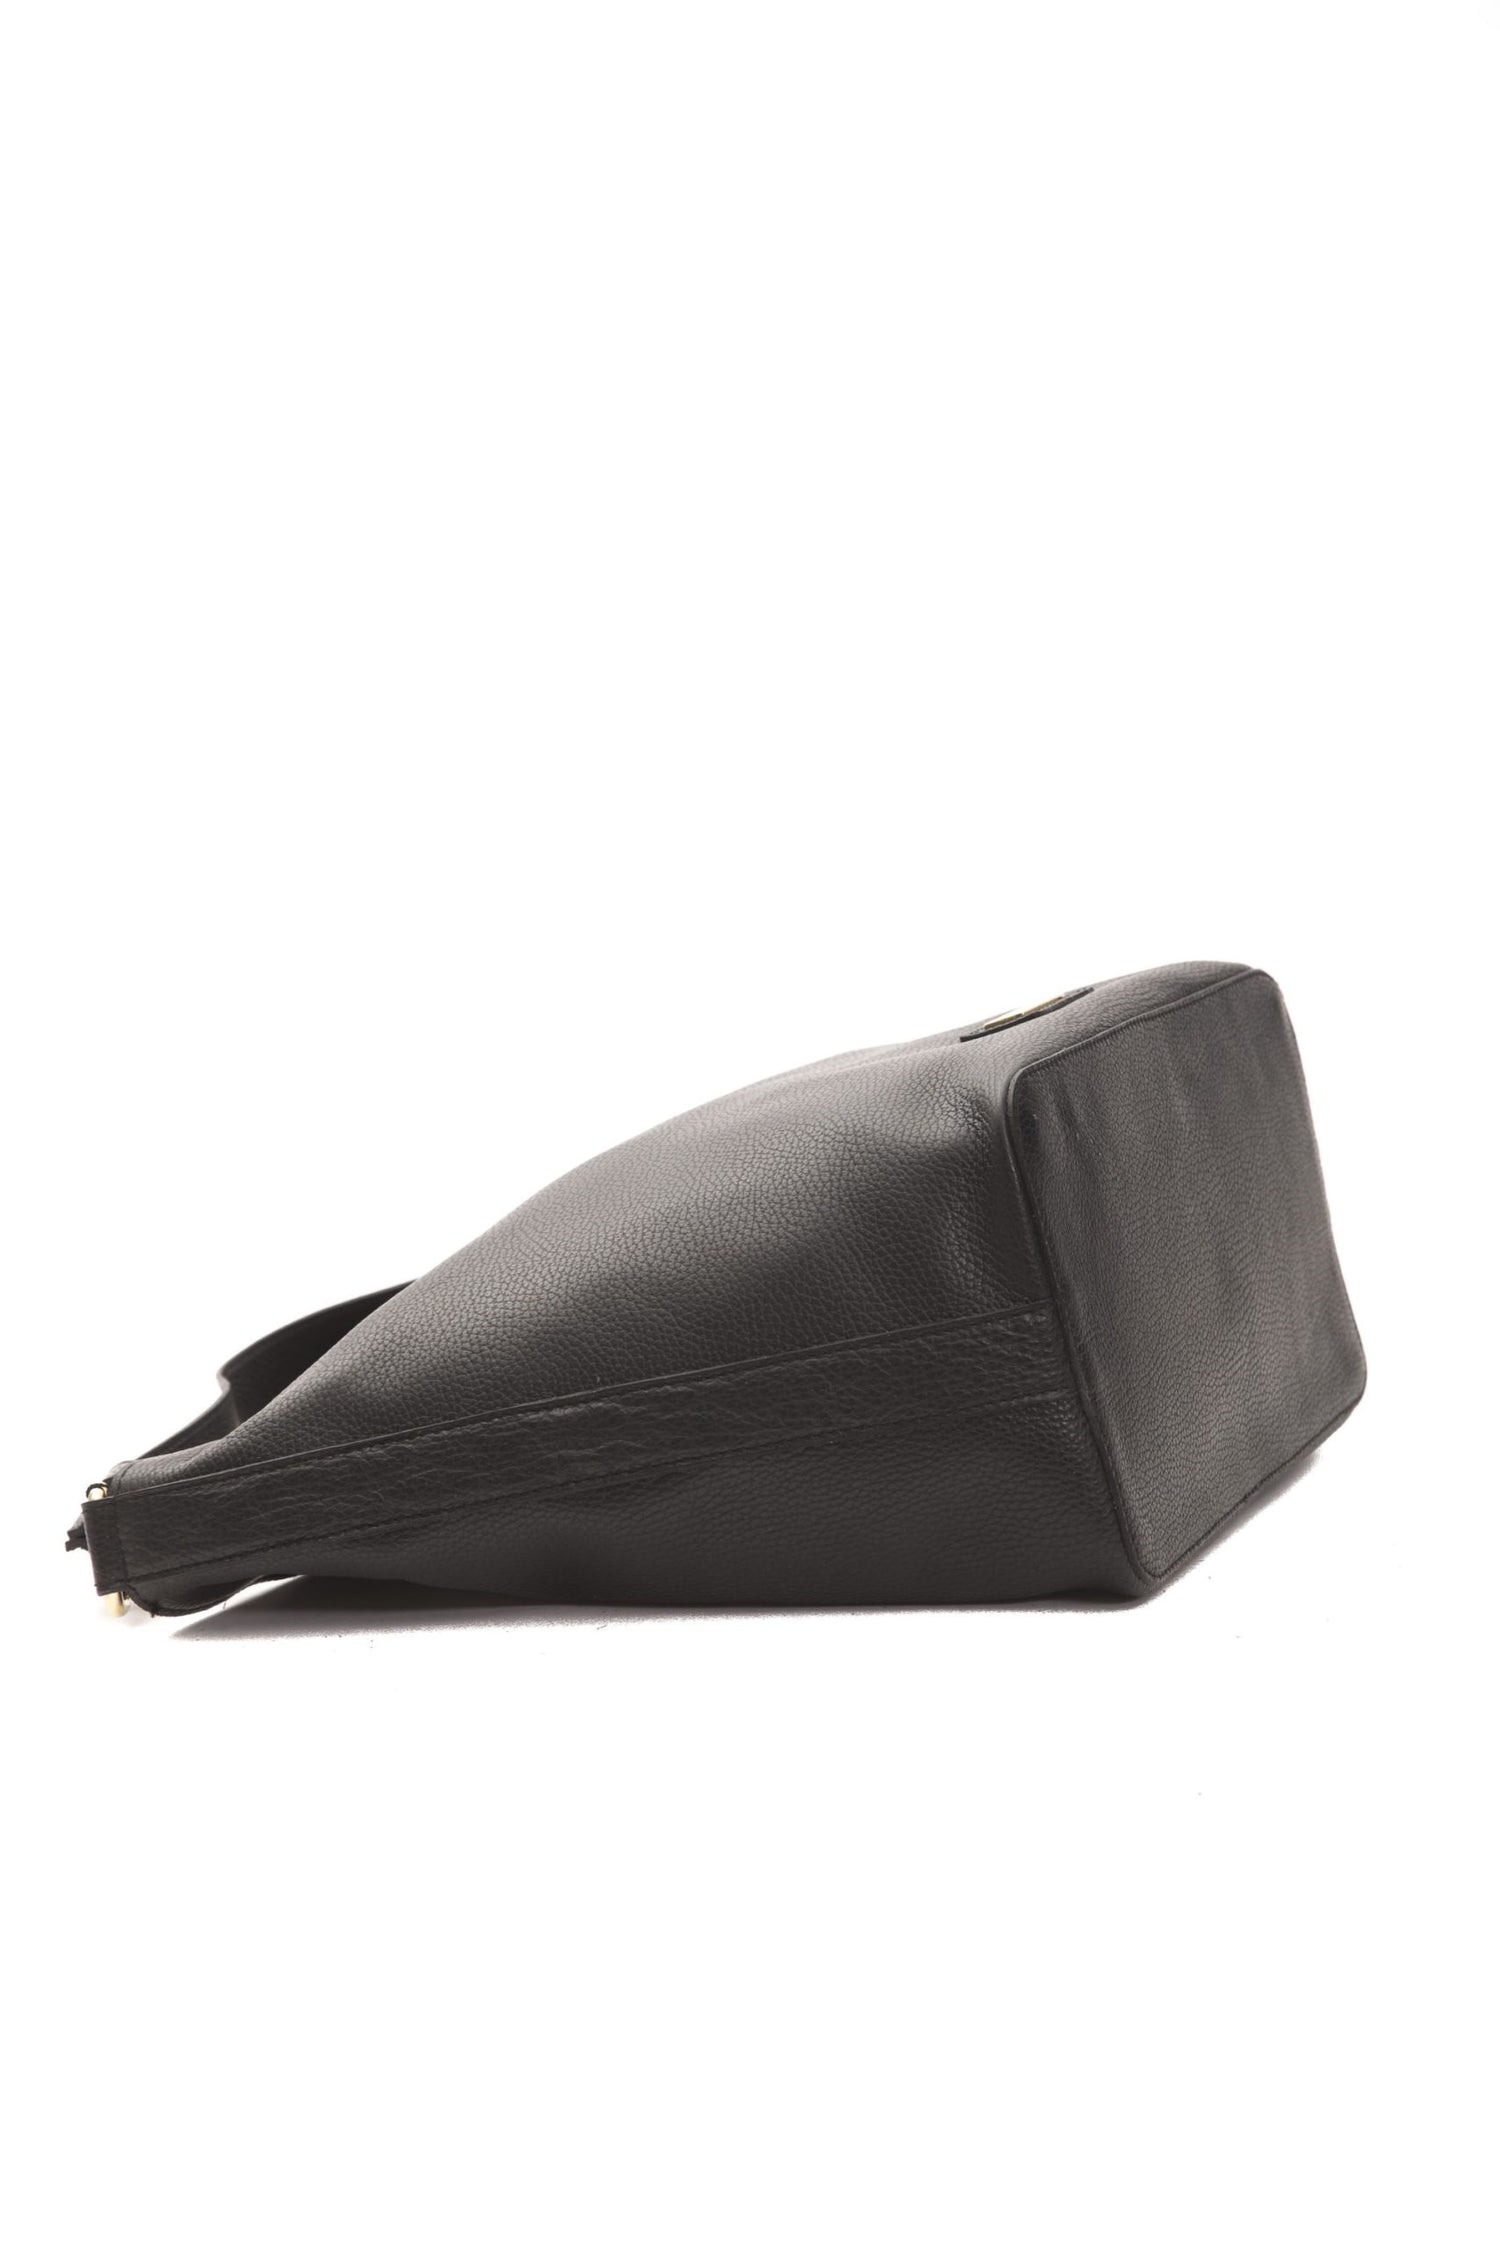 Pompei Donatella Black Leather Shoulder Bag - DEA STILOSA MILANO